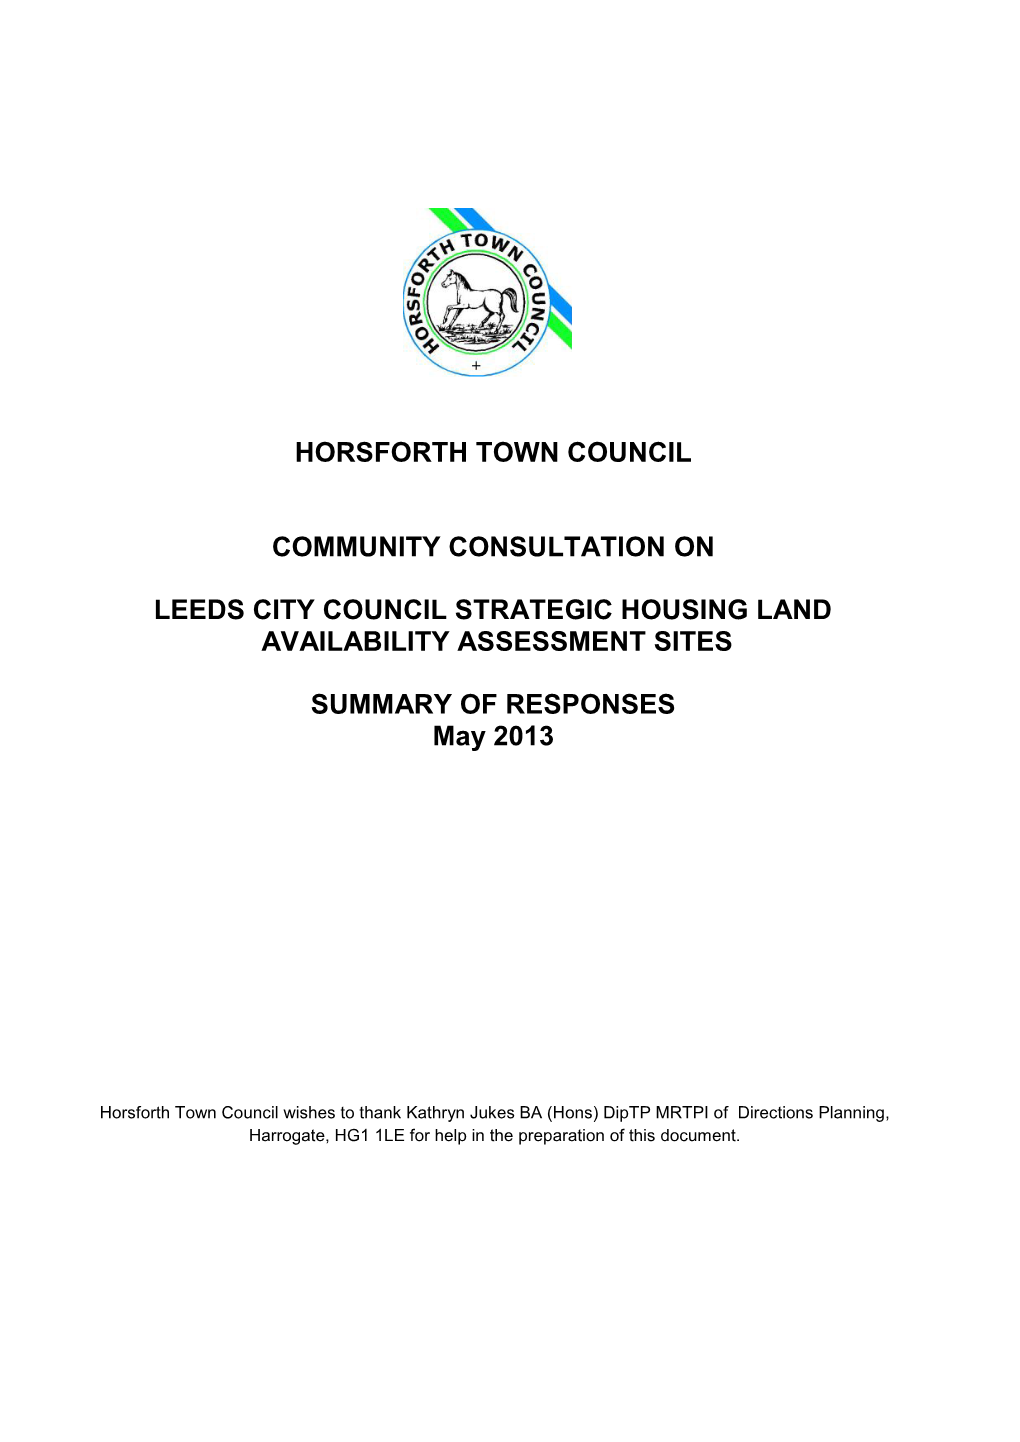 Horsforth Town Council